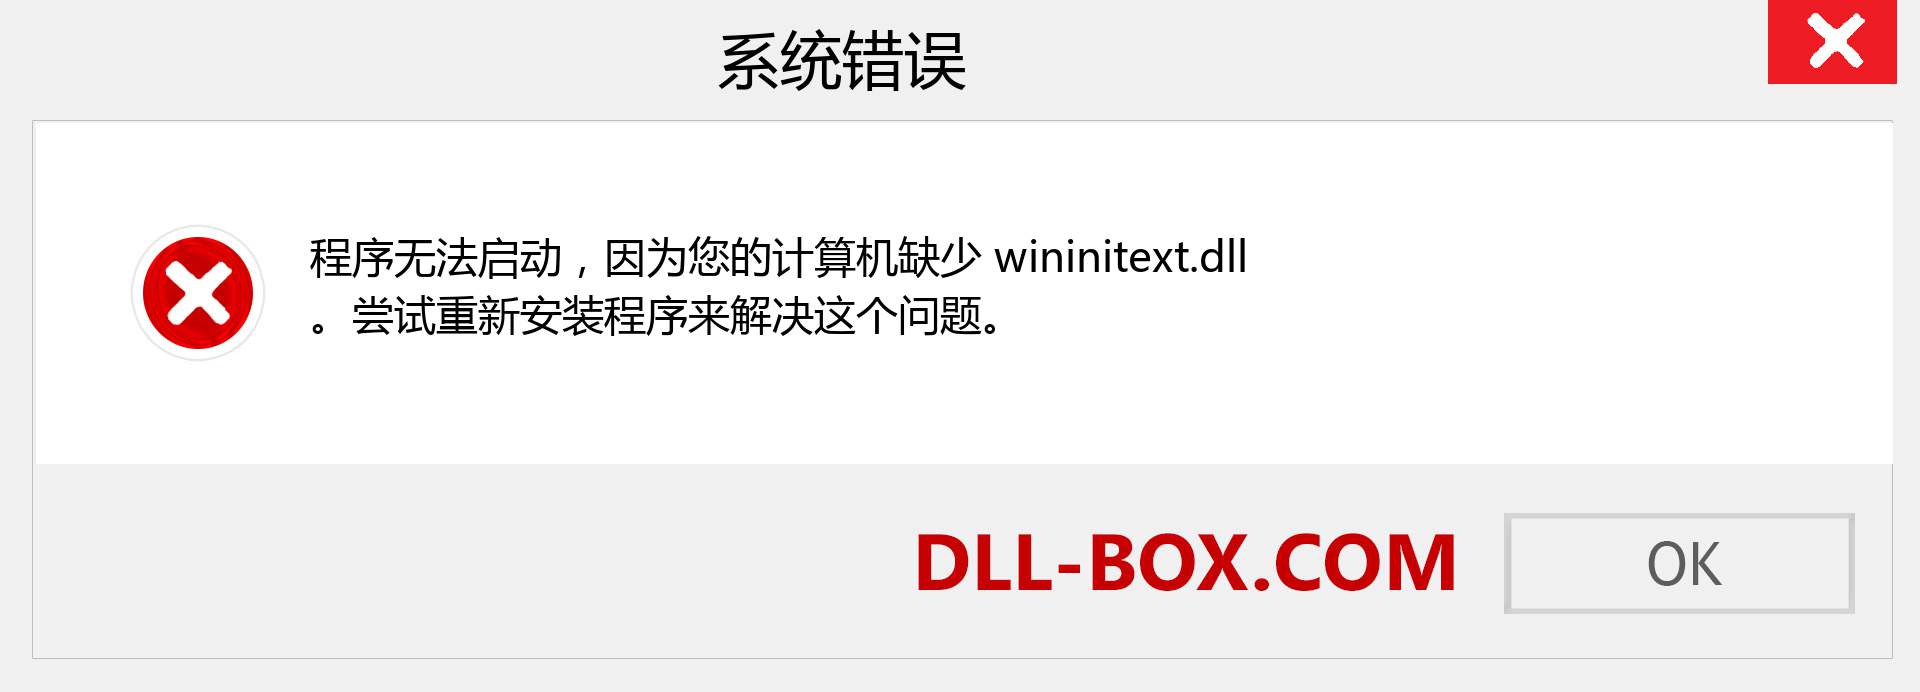 wininitext.dll 文件丢失？。 适用于 Windows 7、8、10 的下载 - 修复 Windows、照片、图像上的 wininitext dll 丢失错误